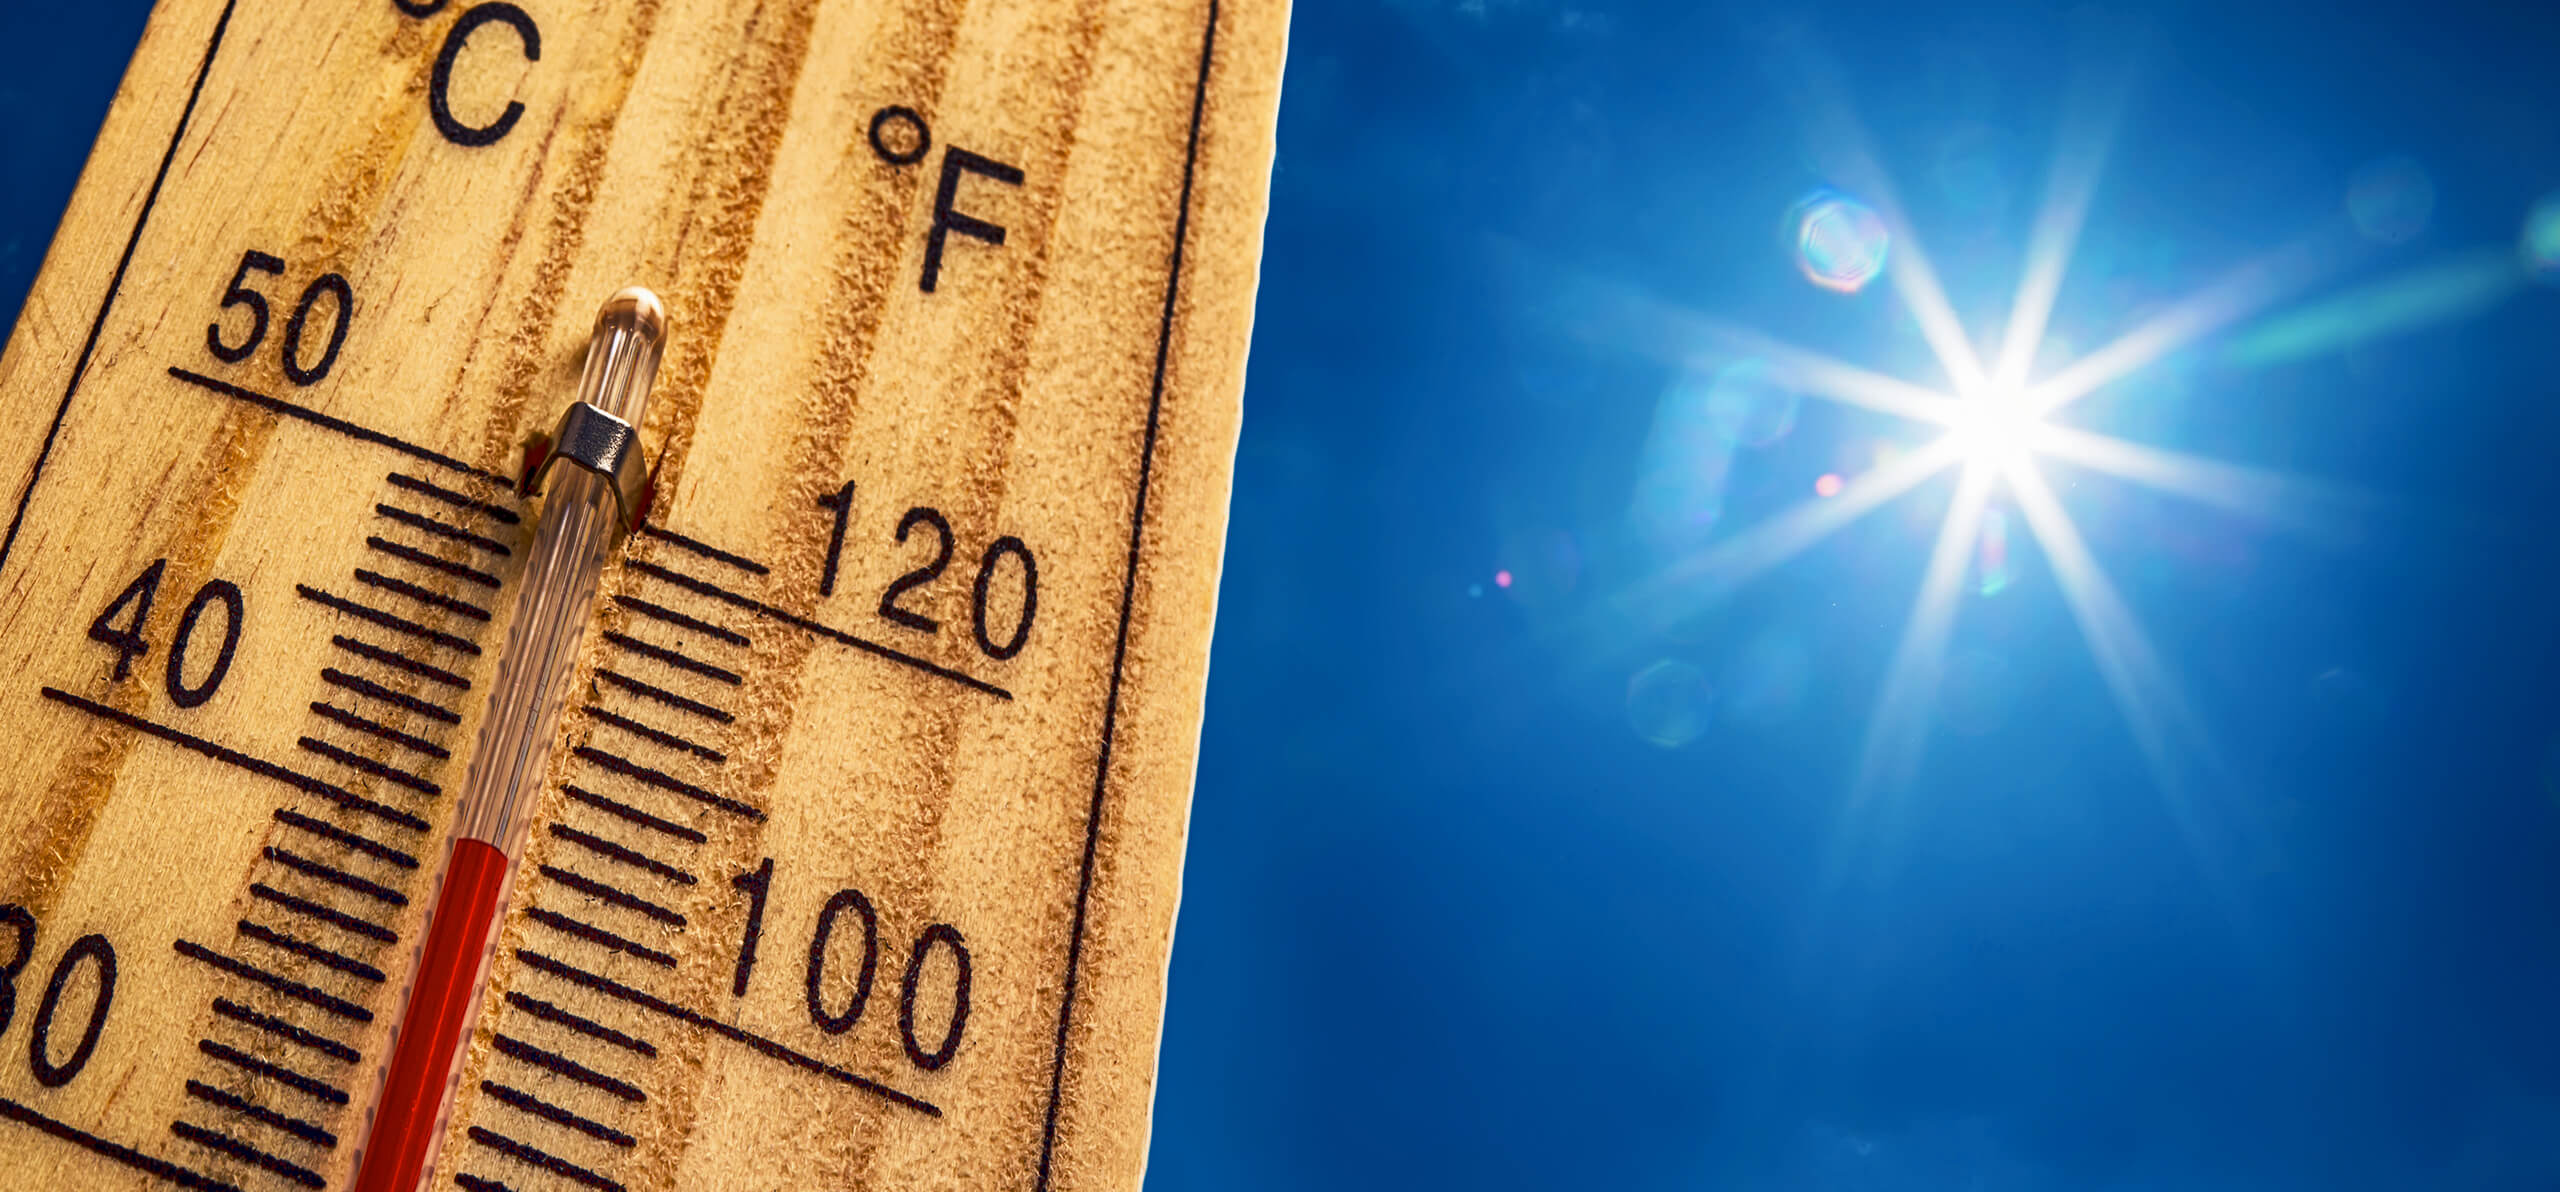 outdoor thermostat reading 104 degrees fahrenheit